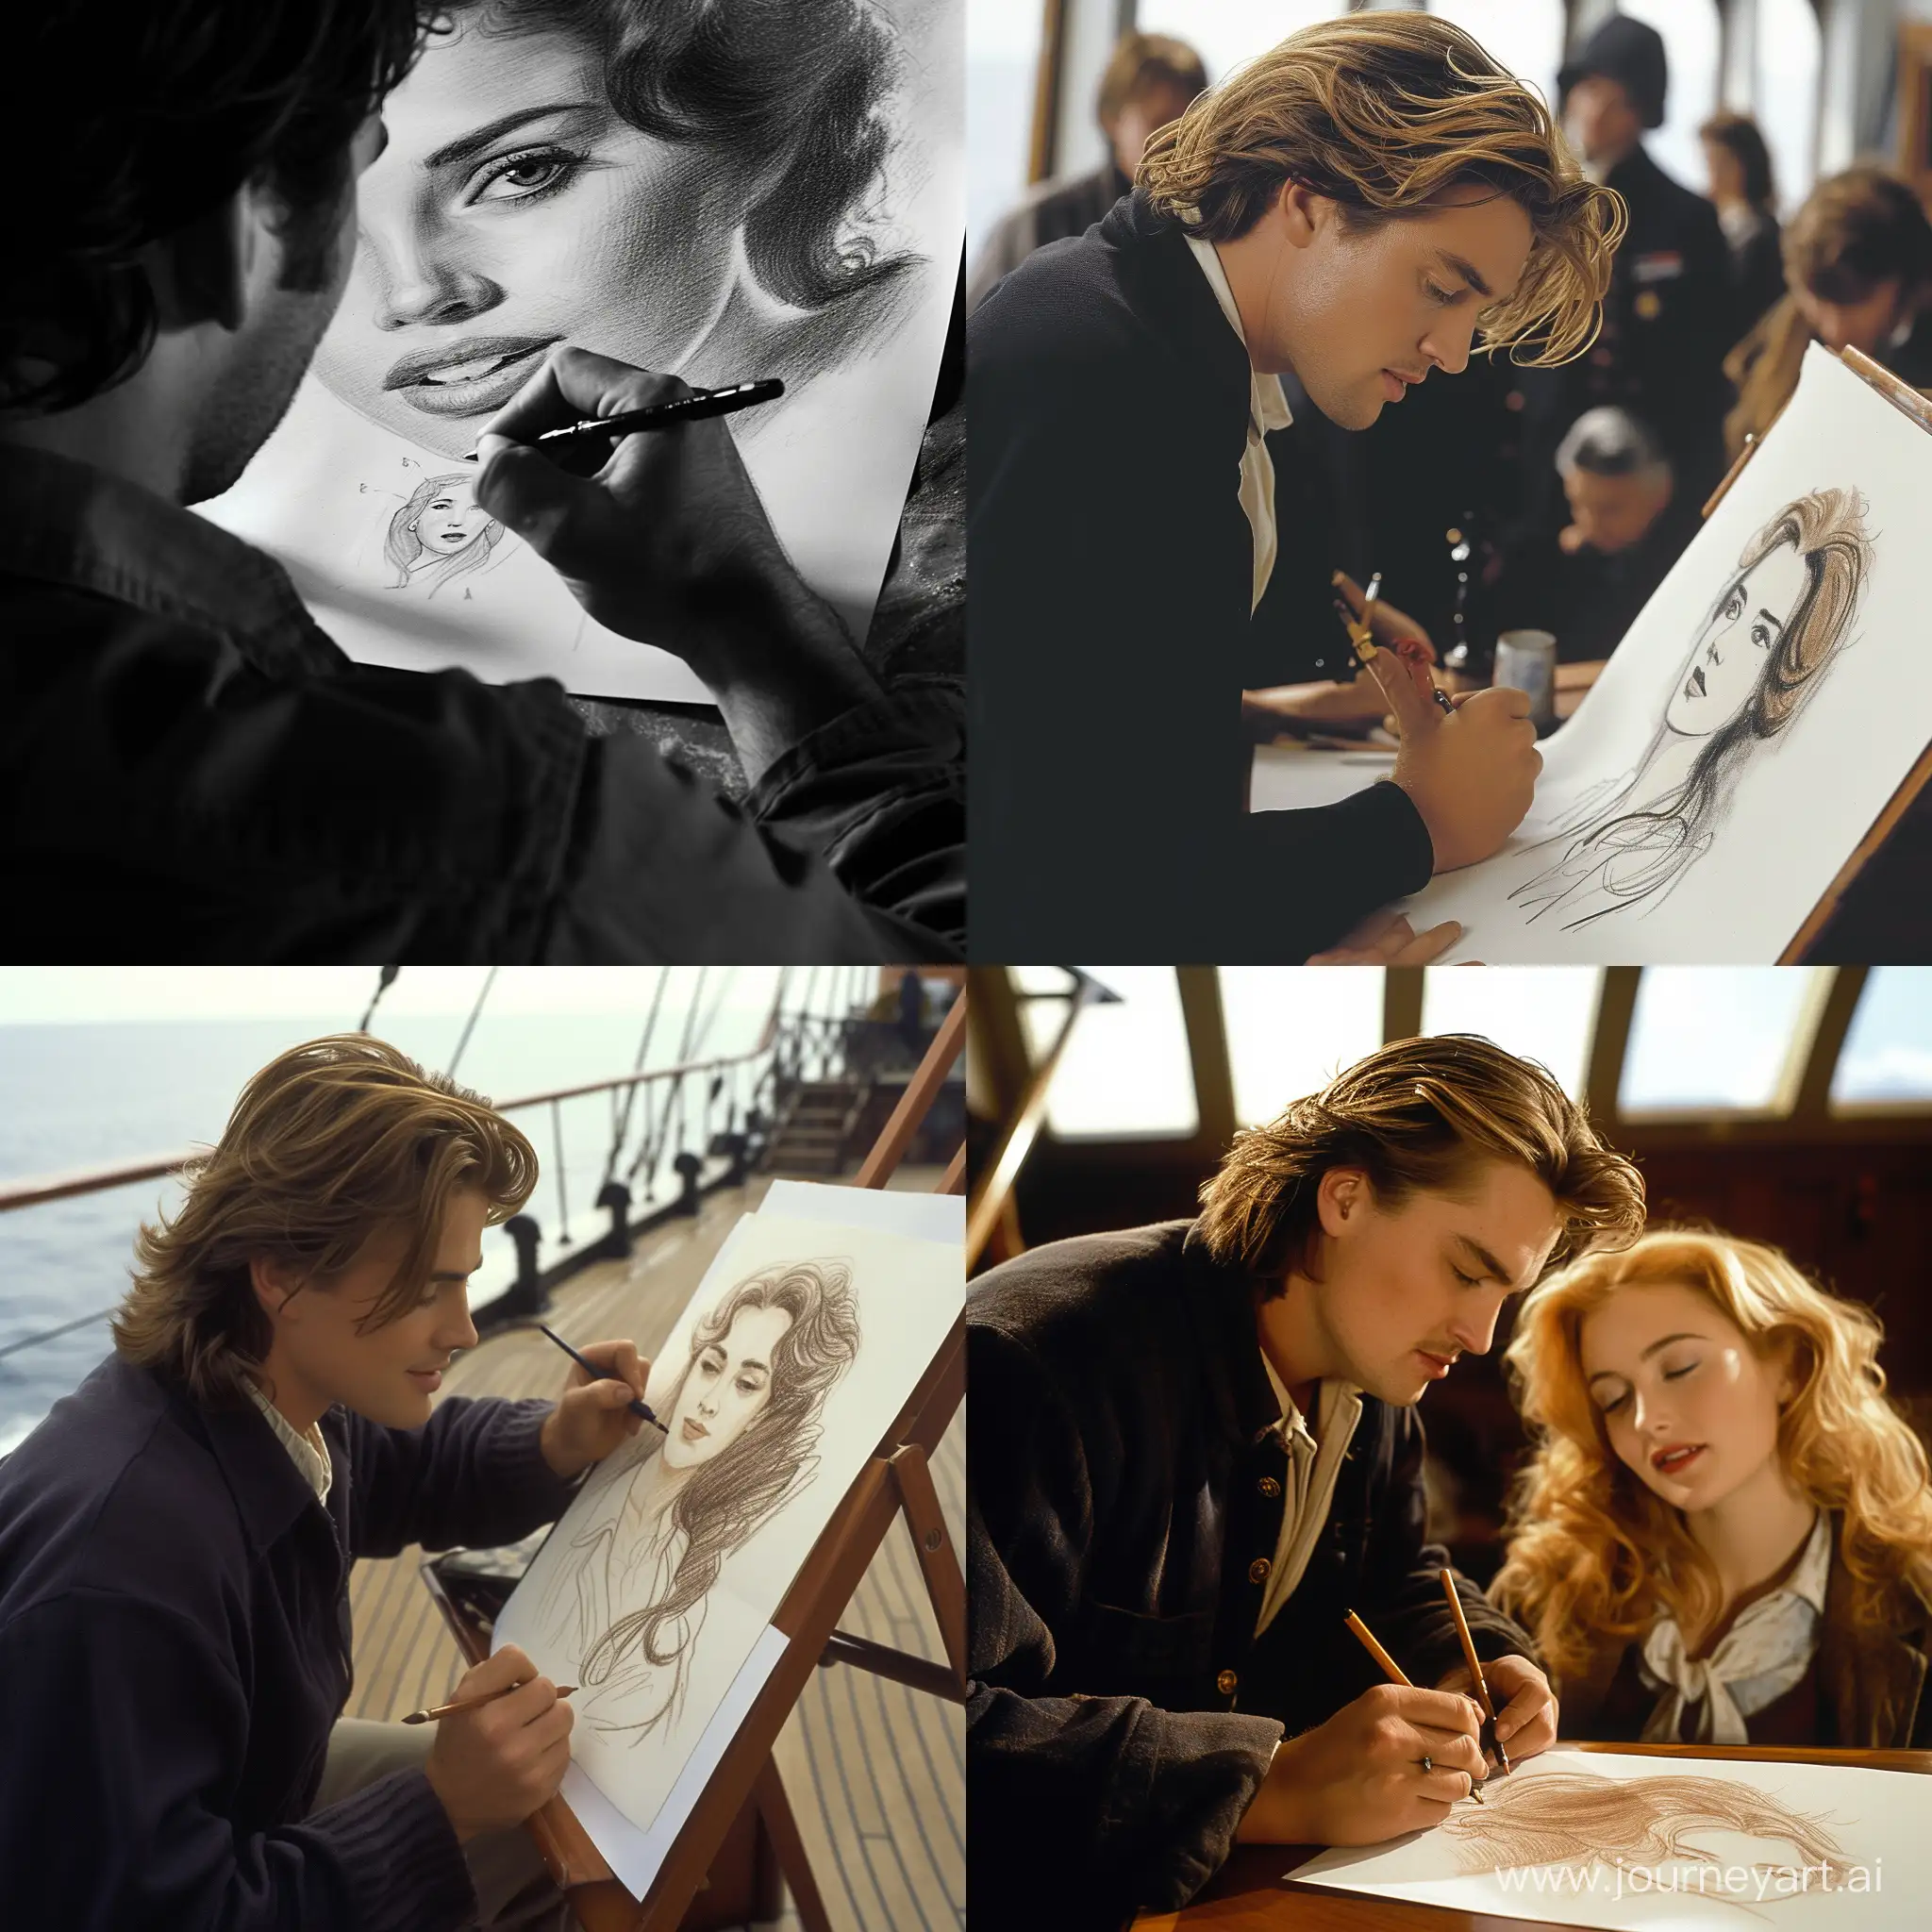 Titanic movie scene, Jack drawing a portrait of Rose